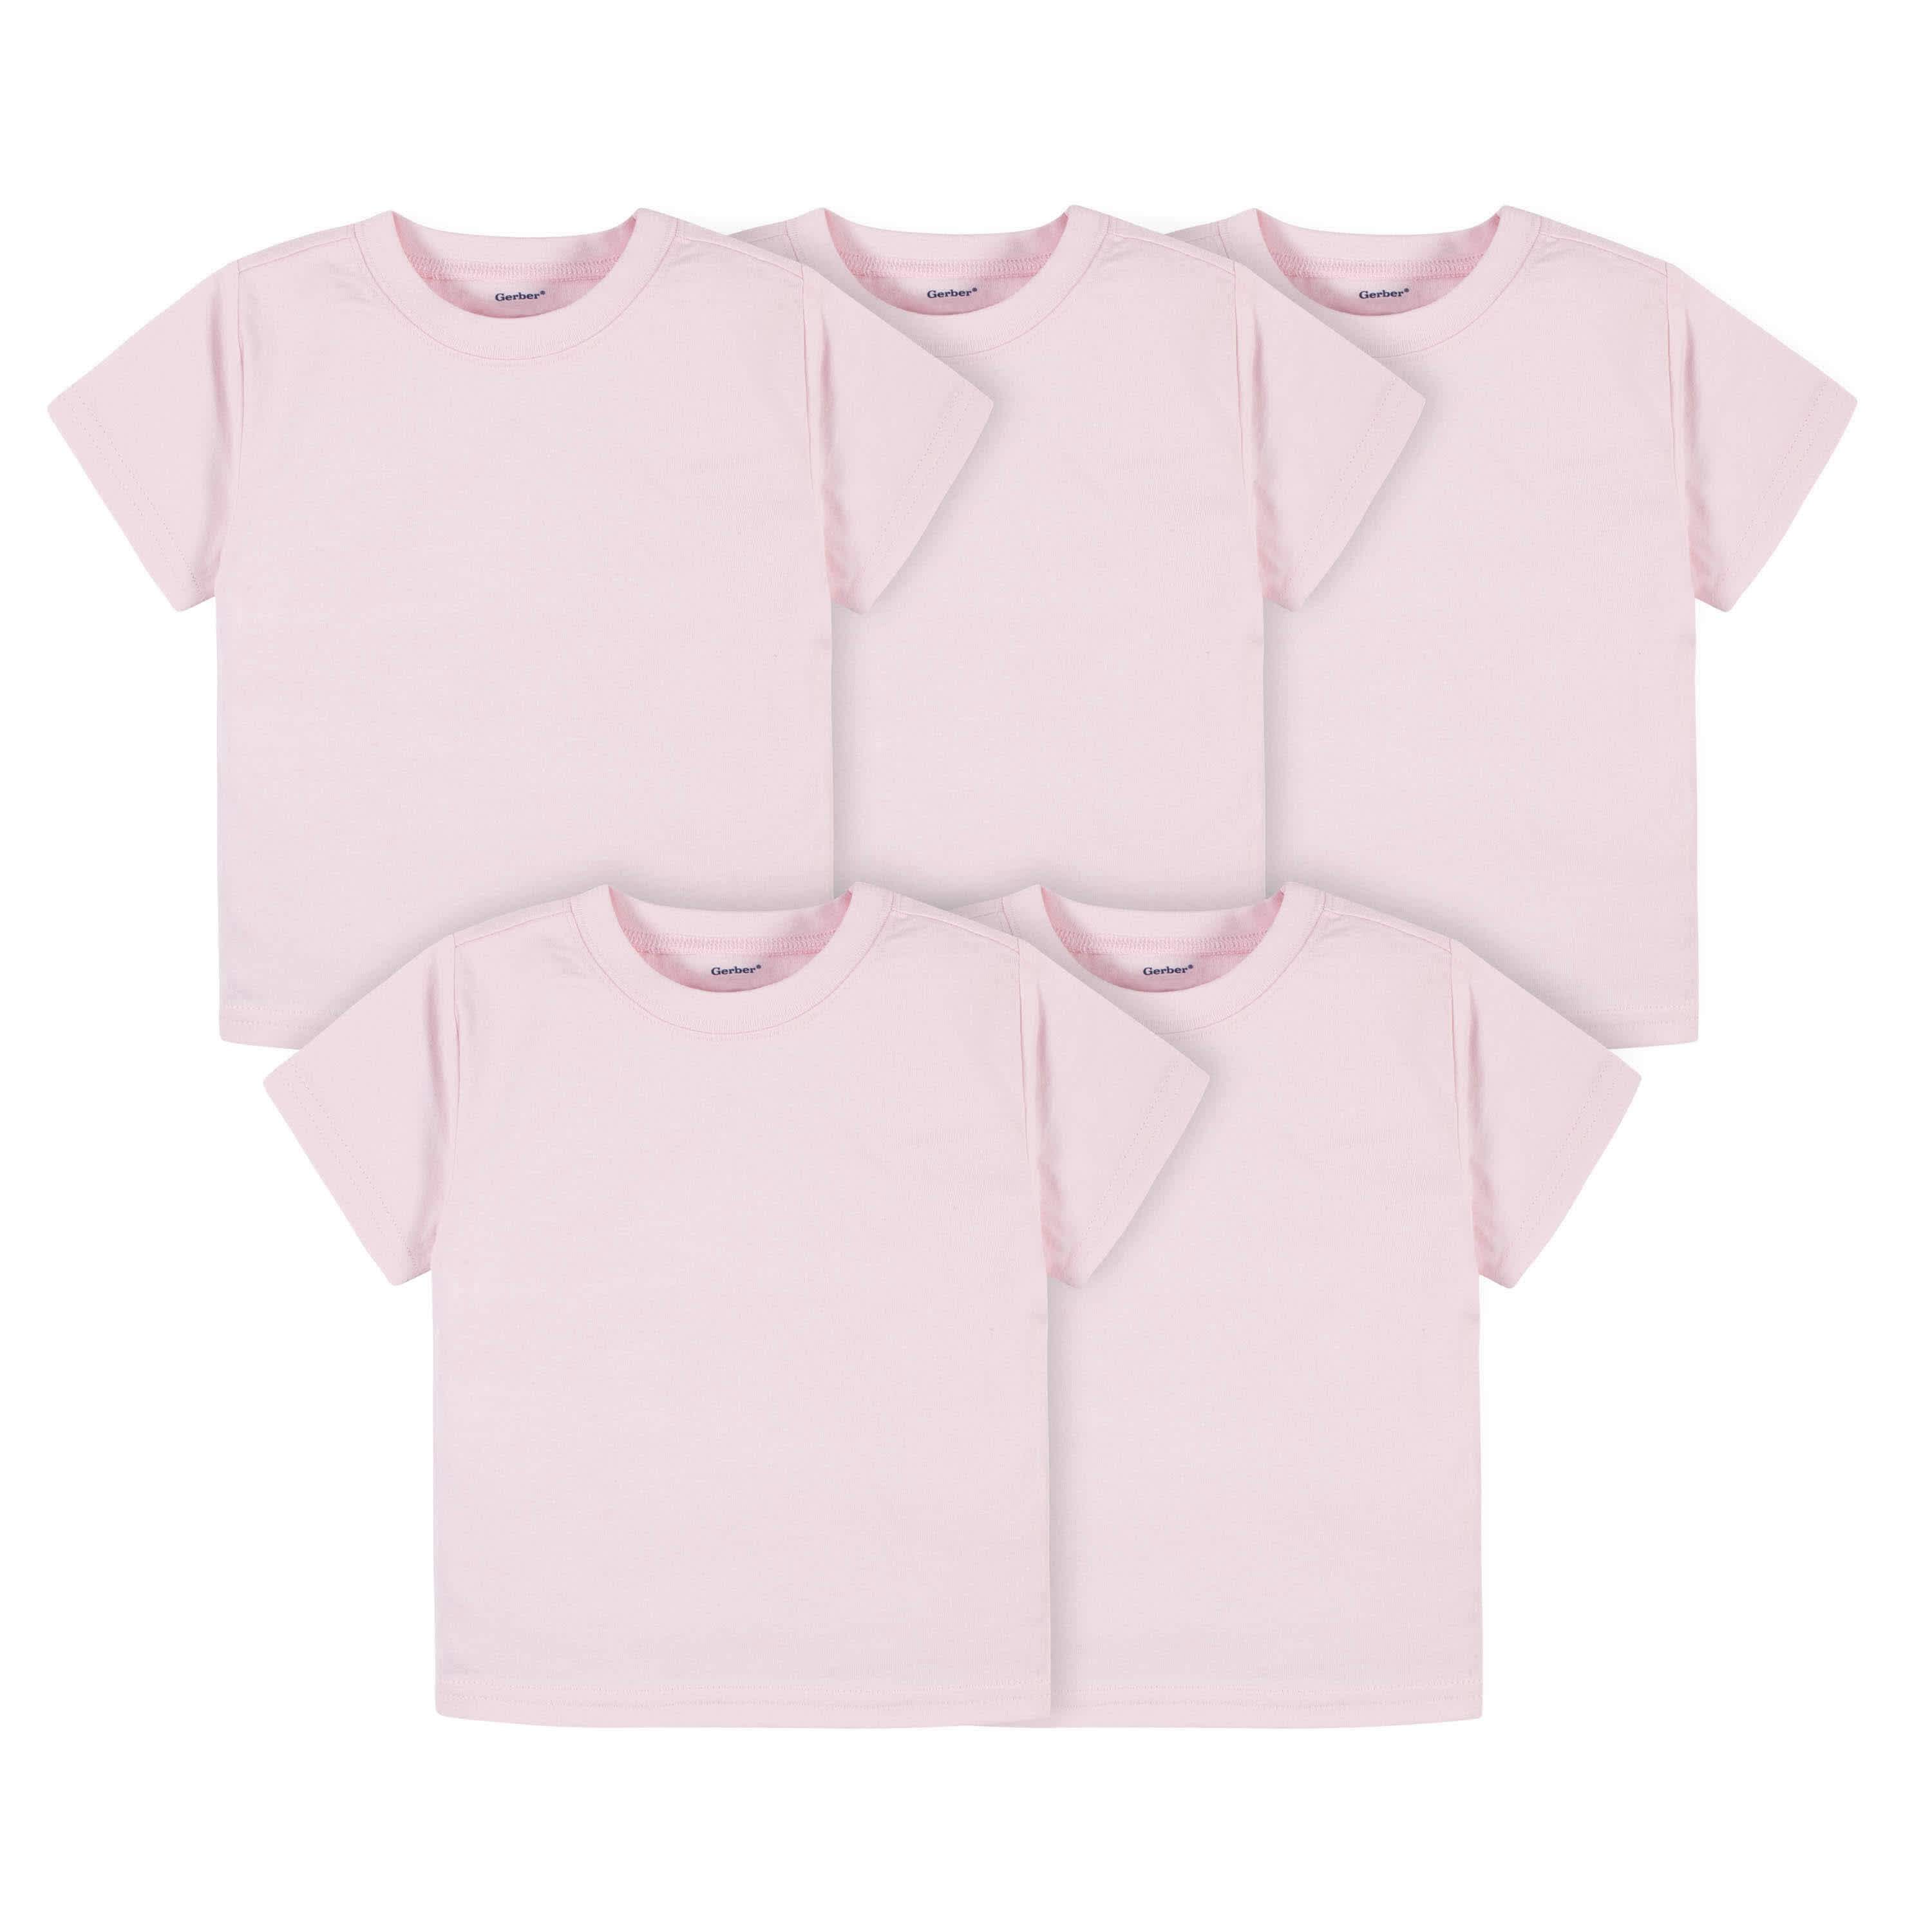 Gerber 5-Pack Infant & Toddler Hot Pink Premium Short Sleeve Tees - 2T